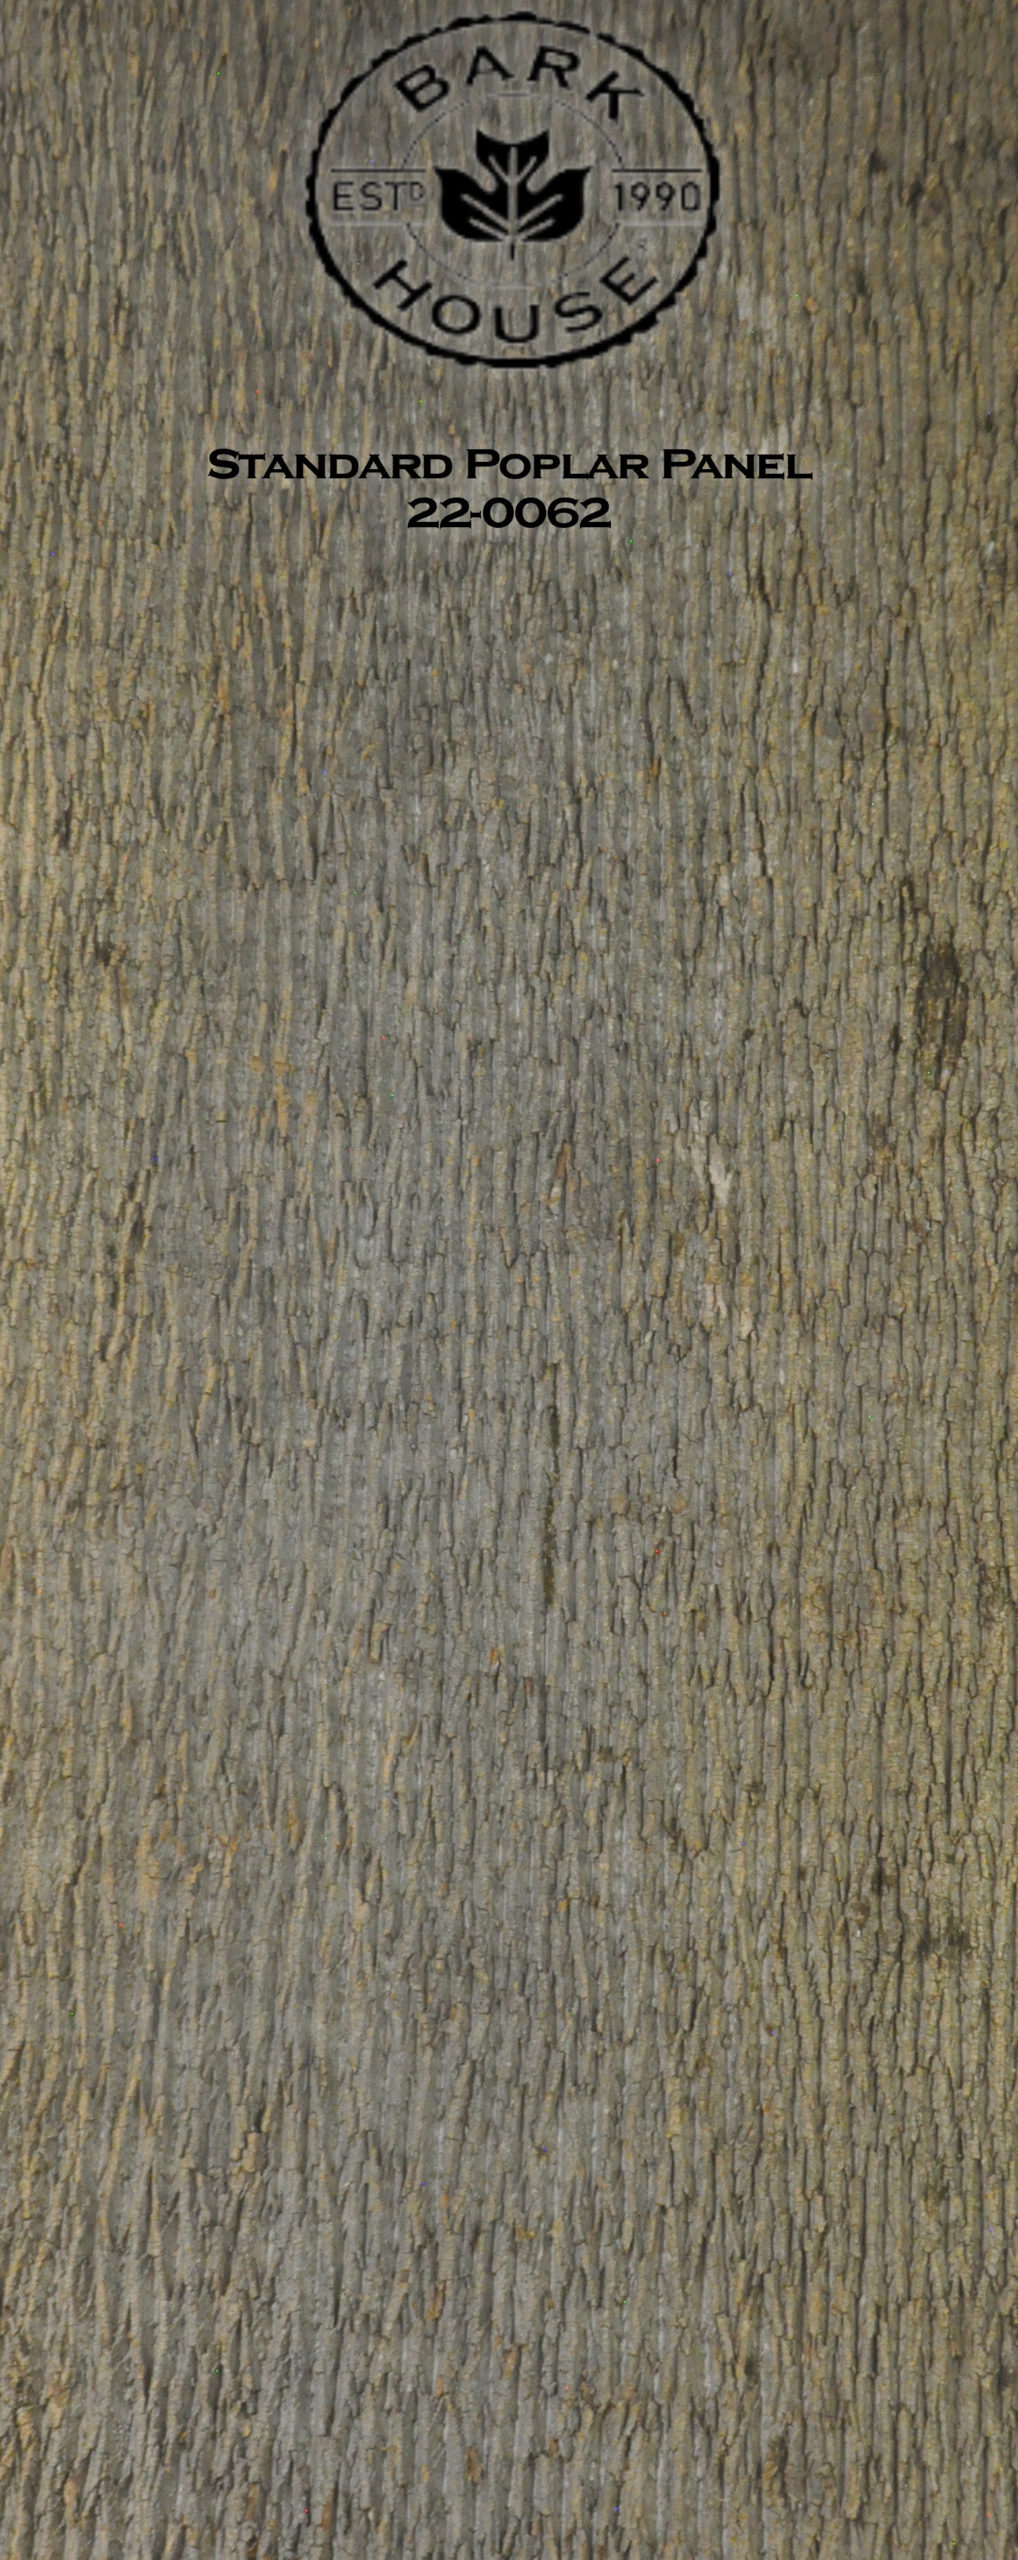 Bark House poplar bark panel SKU POPP-STD-22-0062